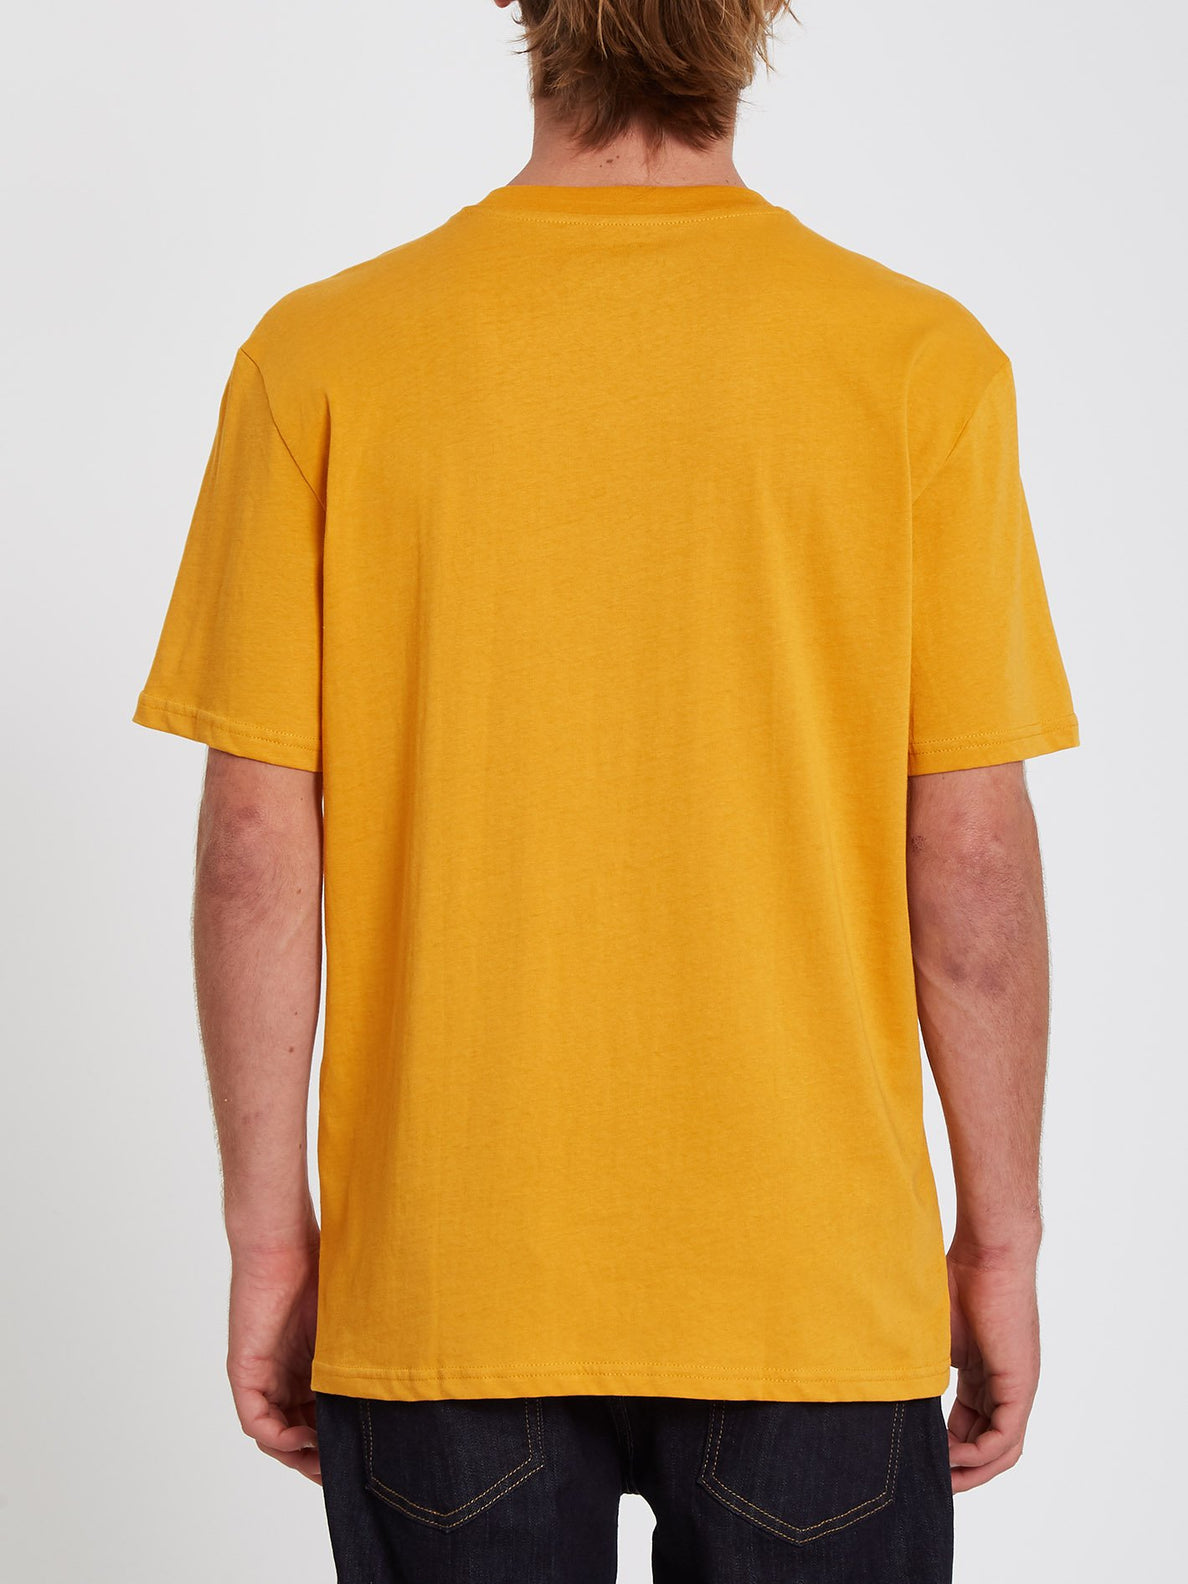 Crostic T-shirt - VINTAGE GOLD (A3532110_VGD) [B]